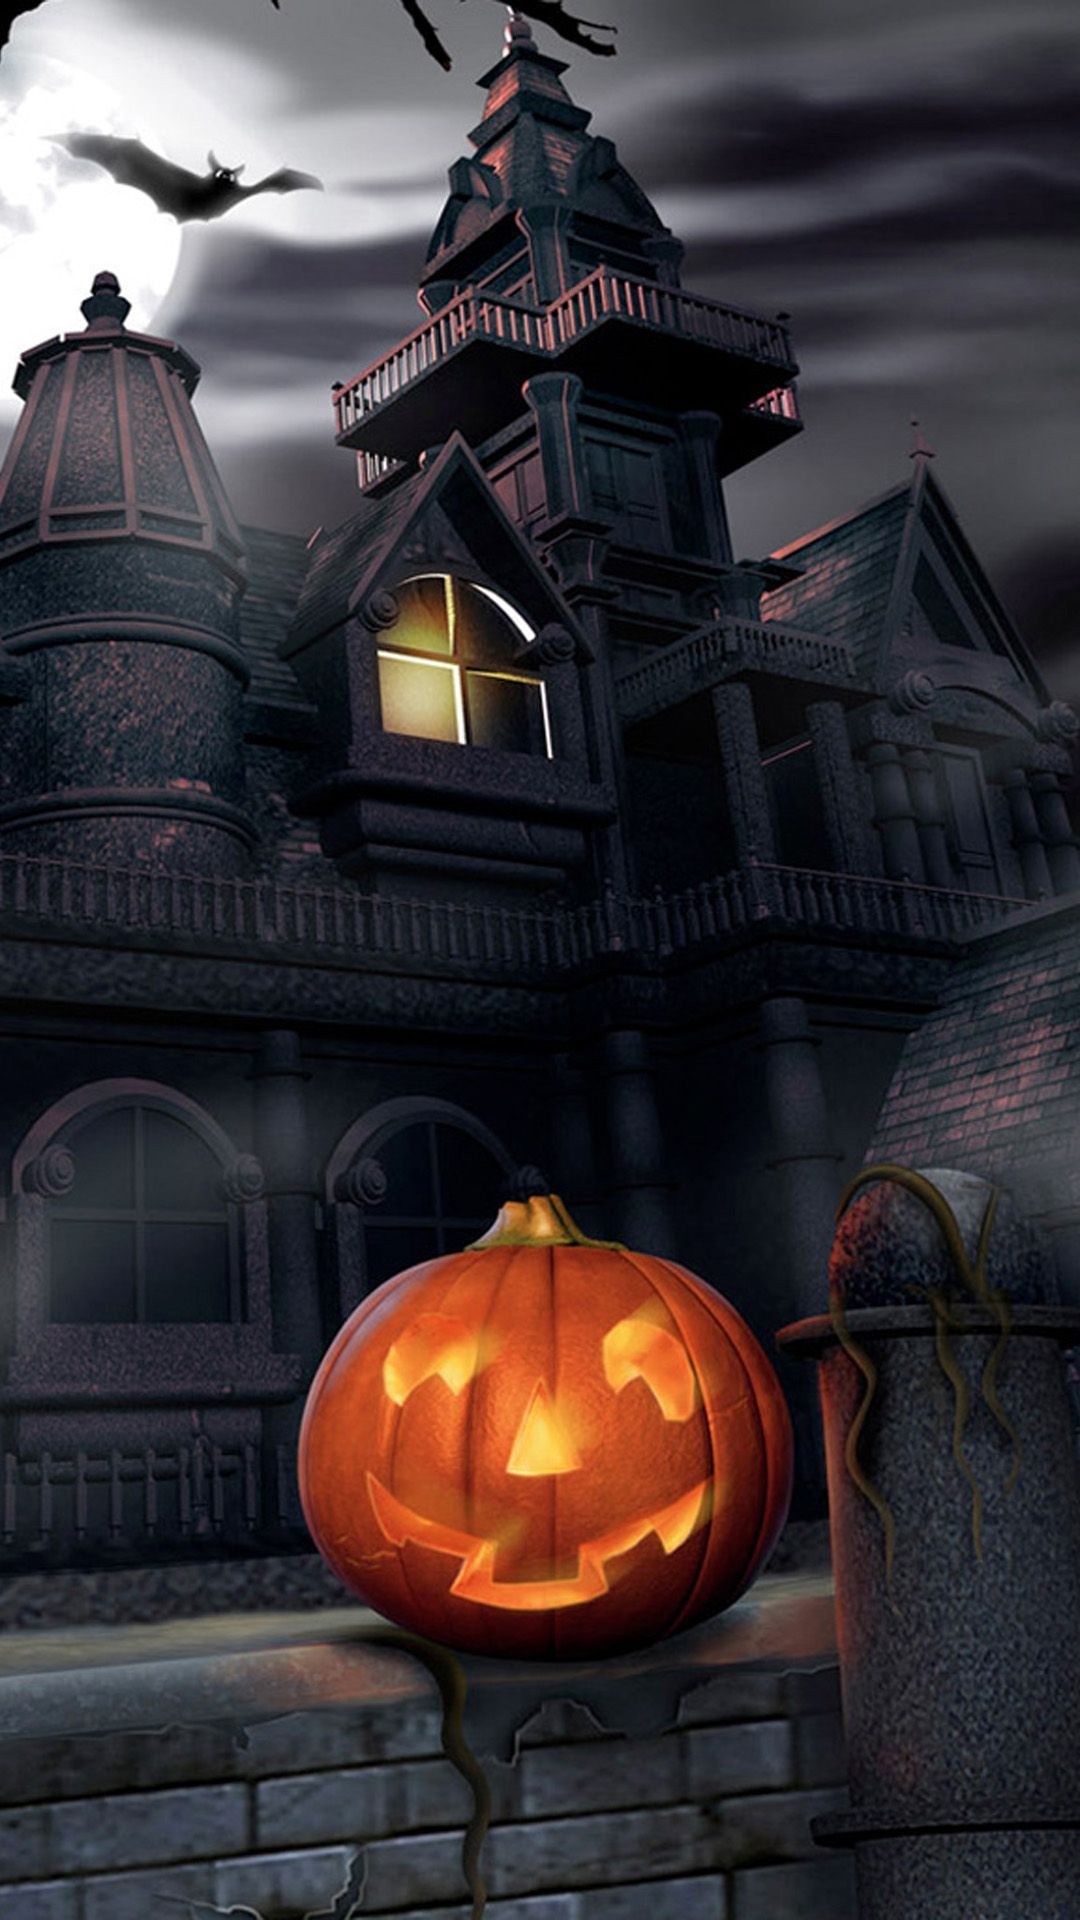 Haunted Skull Halloween iPhone 6 & iPhone 6 Plus Wallpaper. Halloween wallpaper, Halloween image, Halloween background